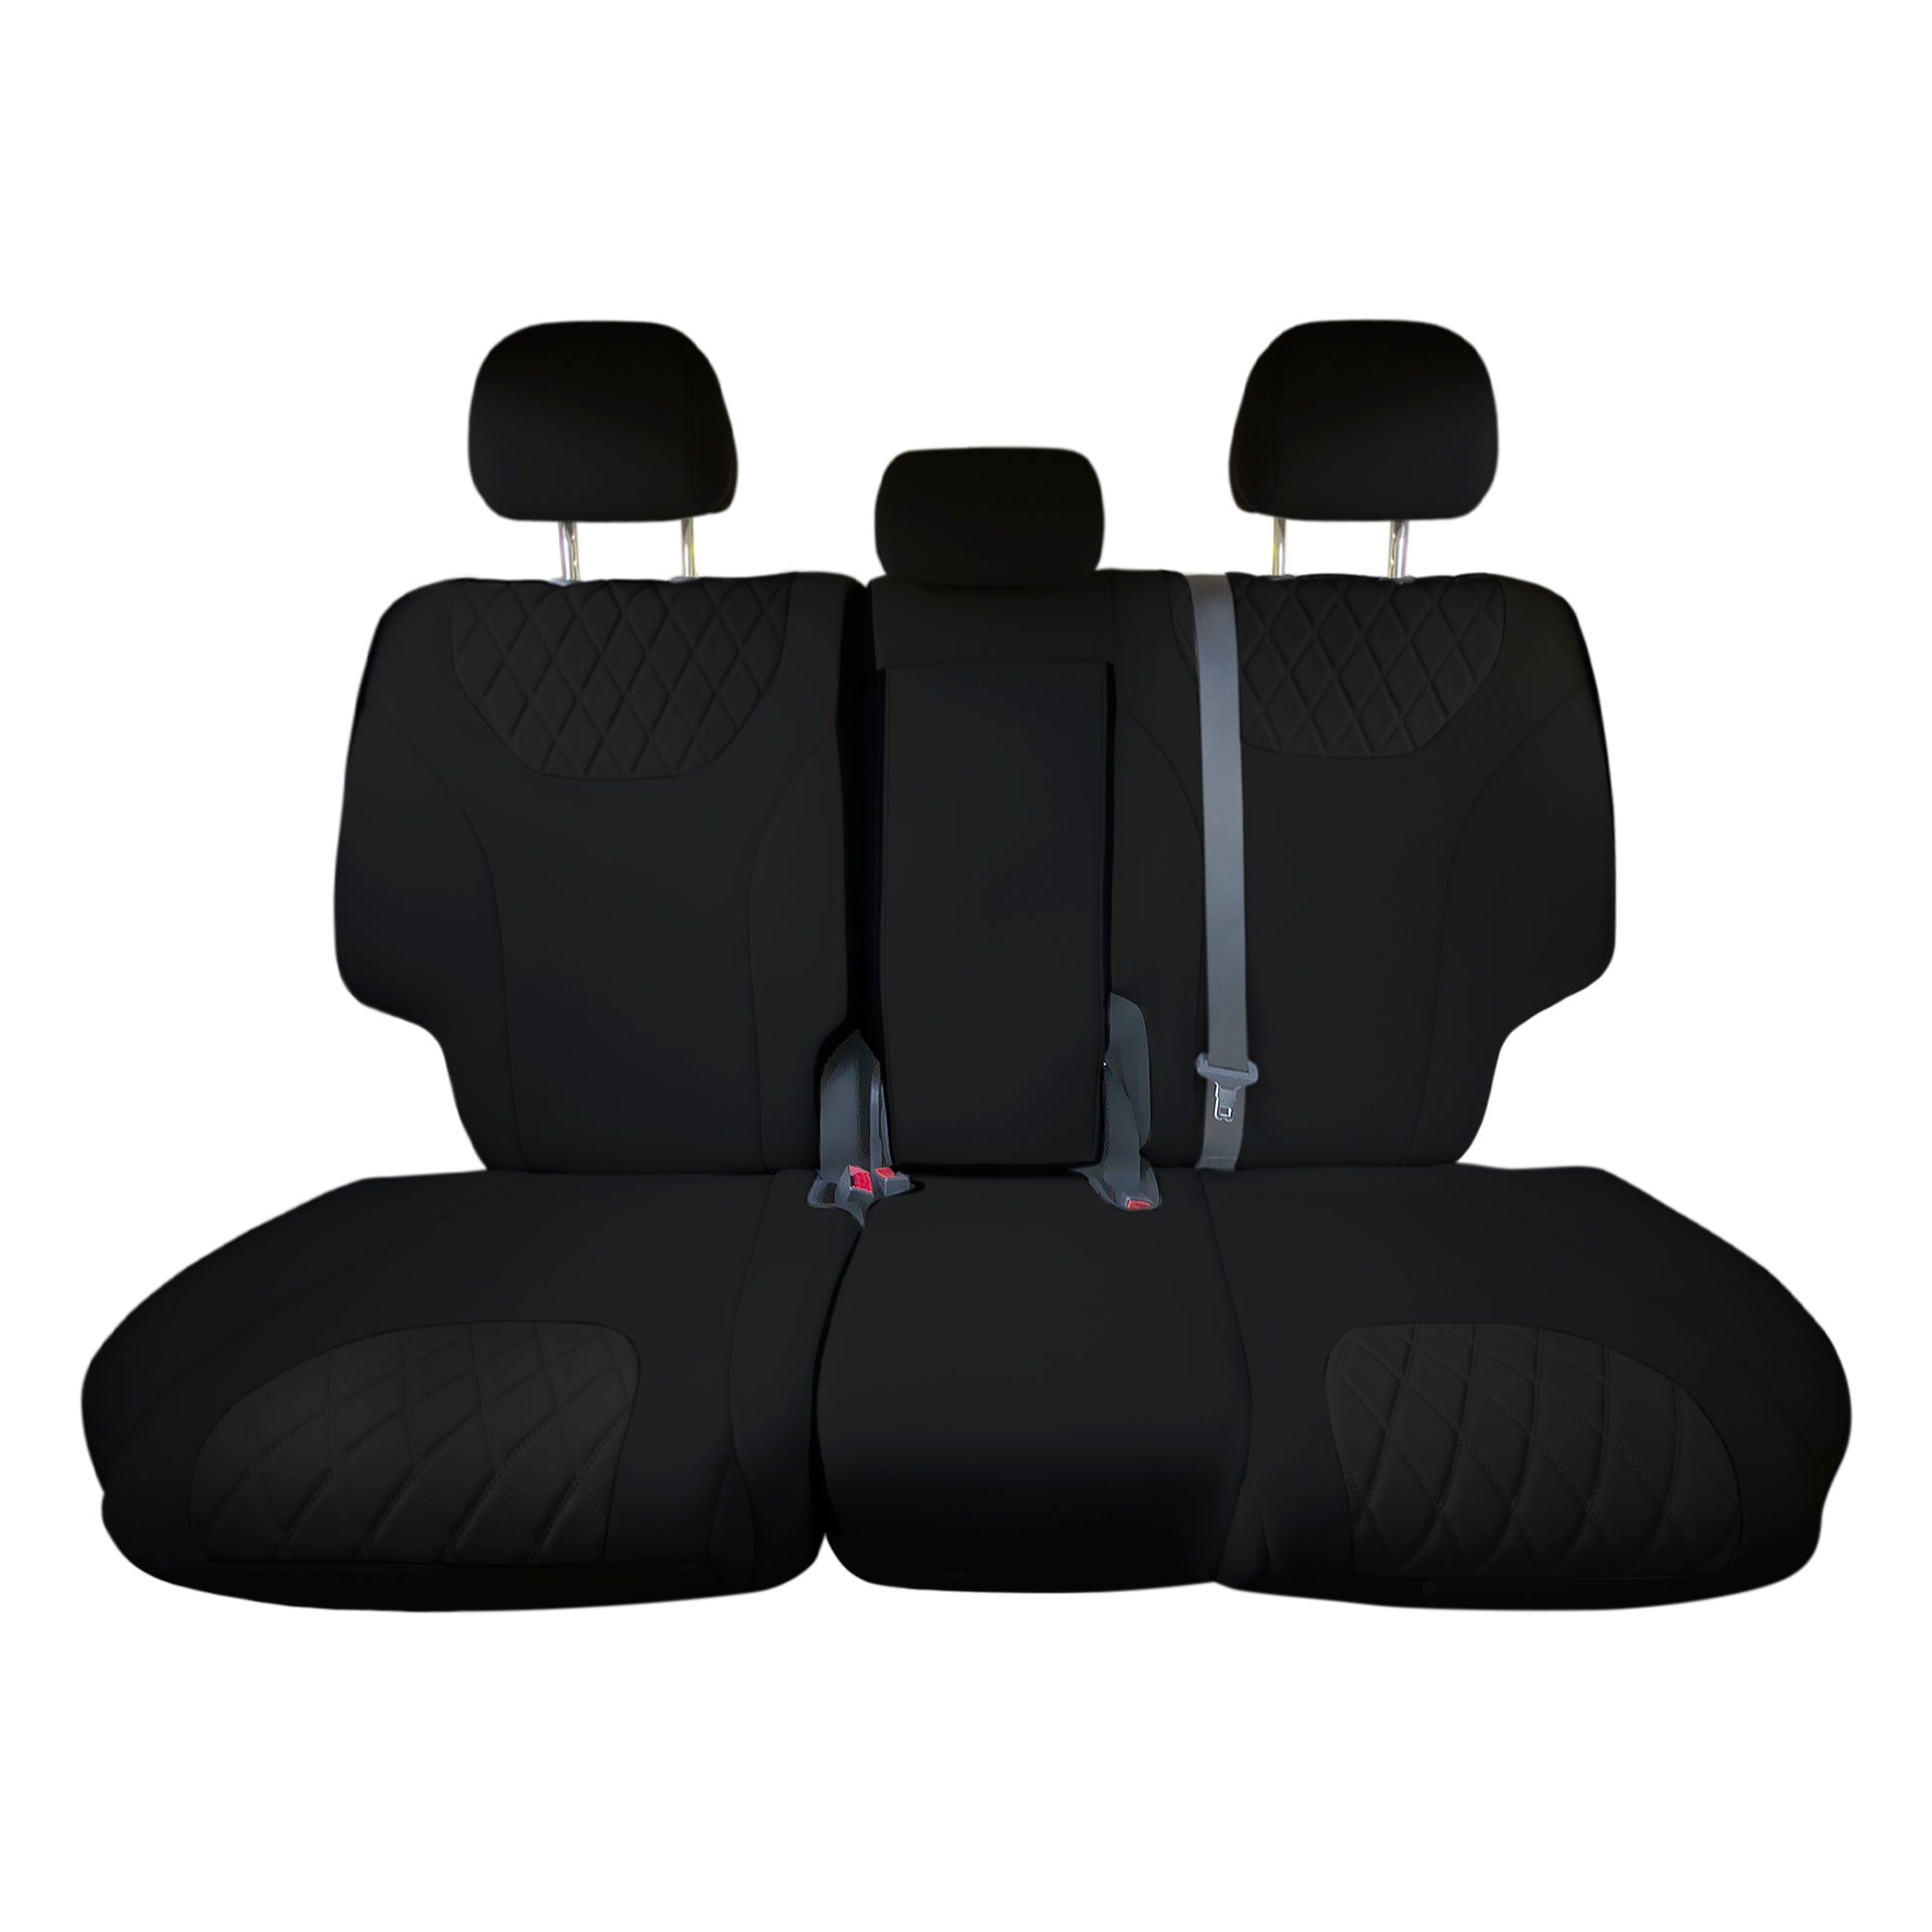 Hyundai Santa Fe 2019 - 2022 - Rear Set Seat Covers - Black  Neoprene